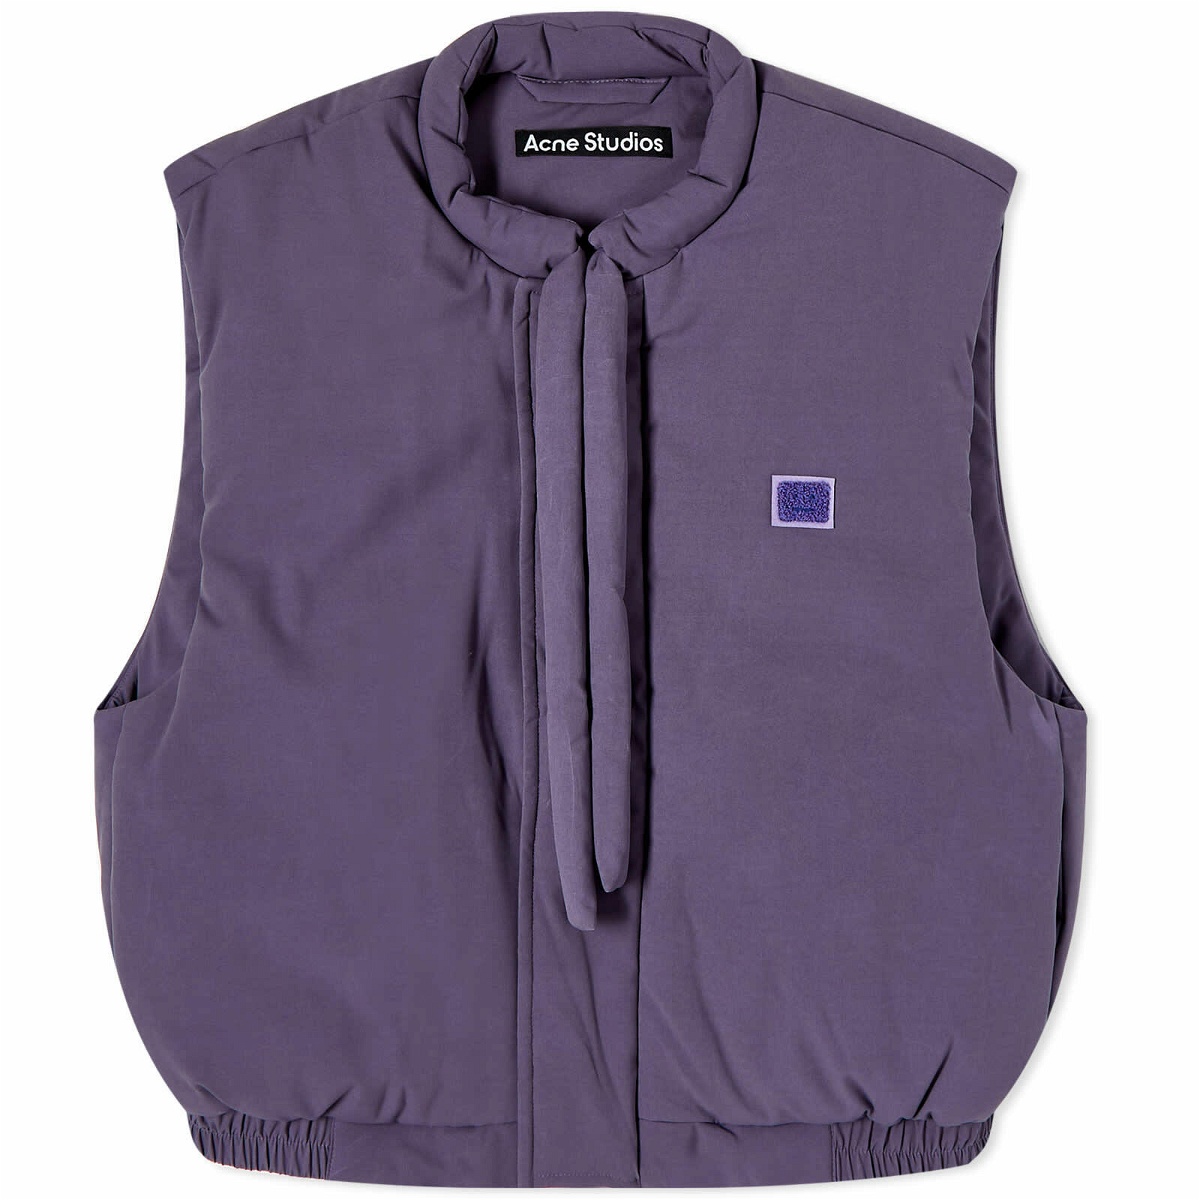 Photo: Acne Studios Osalo Heat Change Padded Face Vest in Black/Lilac Purple